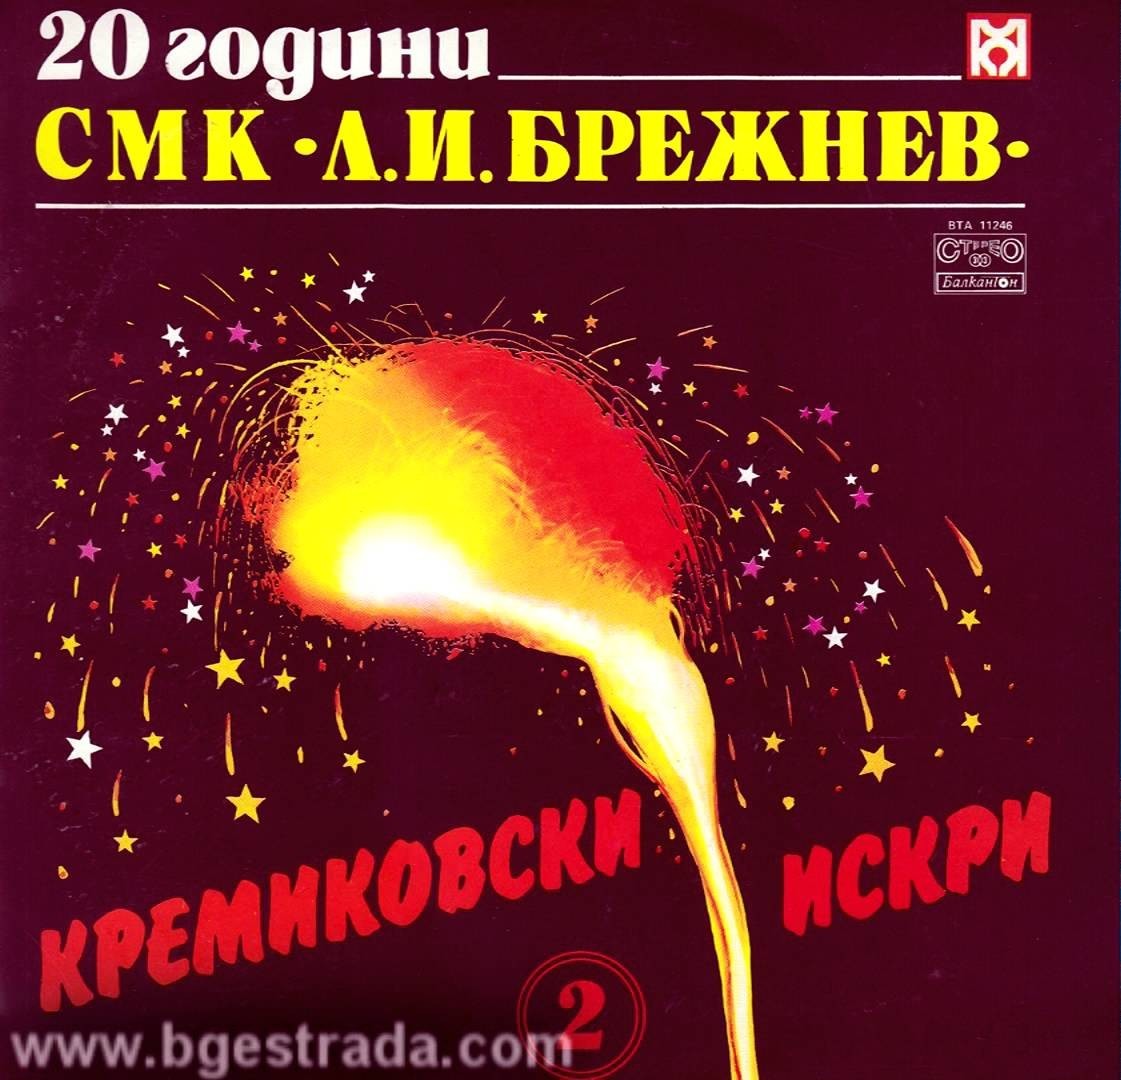 Кремиковски искри-2. 20 години СМК "Л. И. Брежнев"